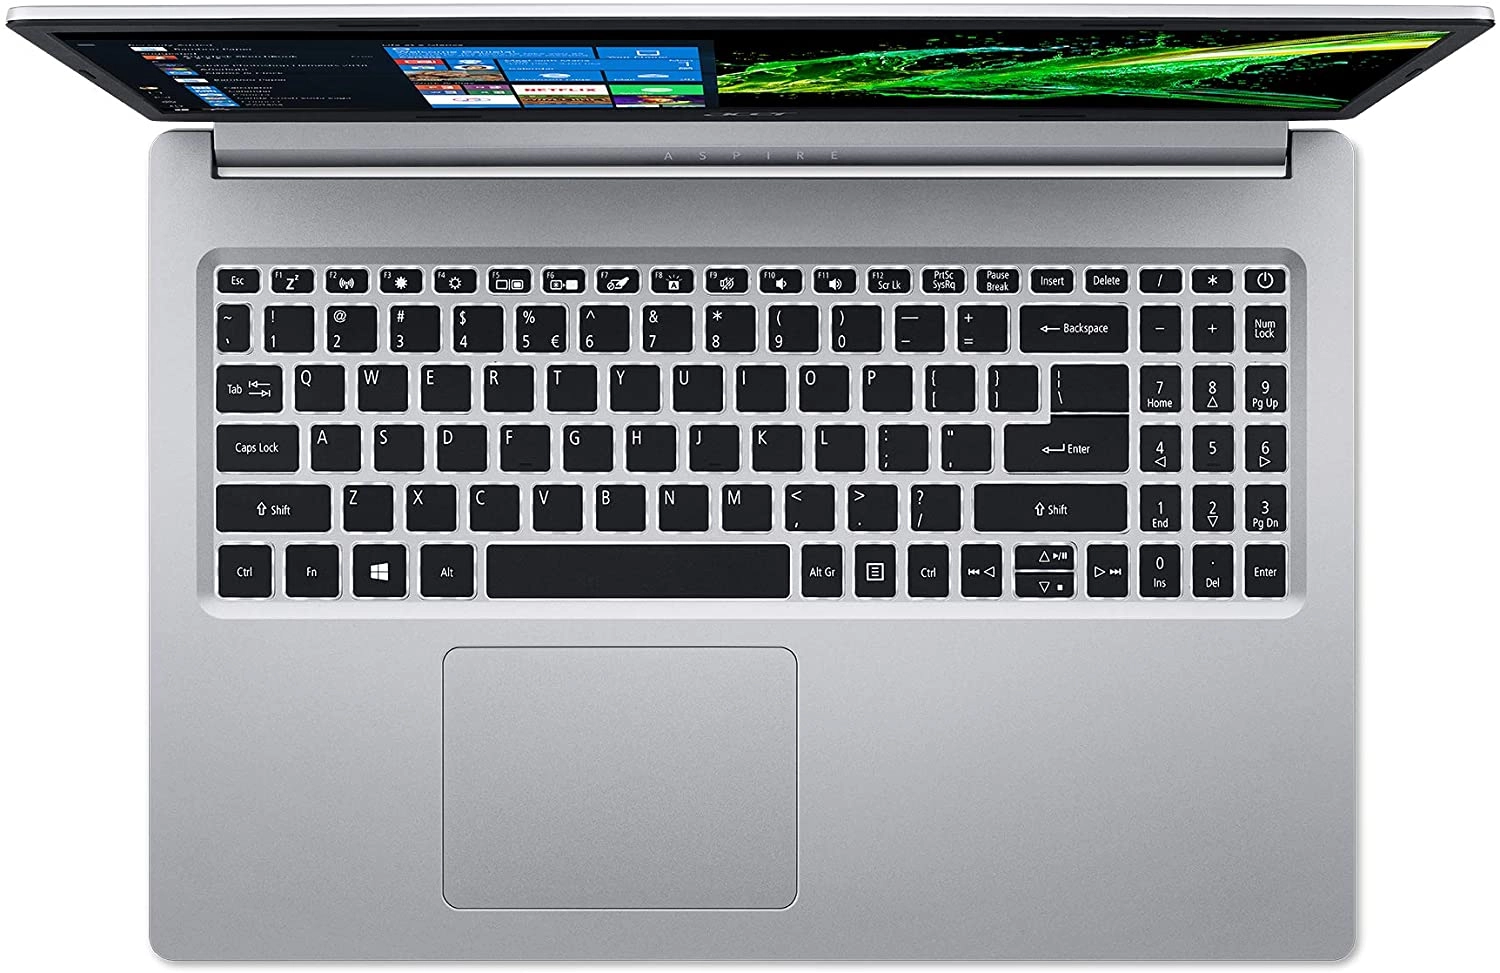 Acer A515-54G-53H6 laptop image